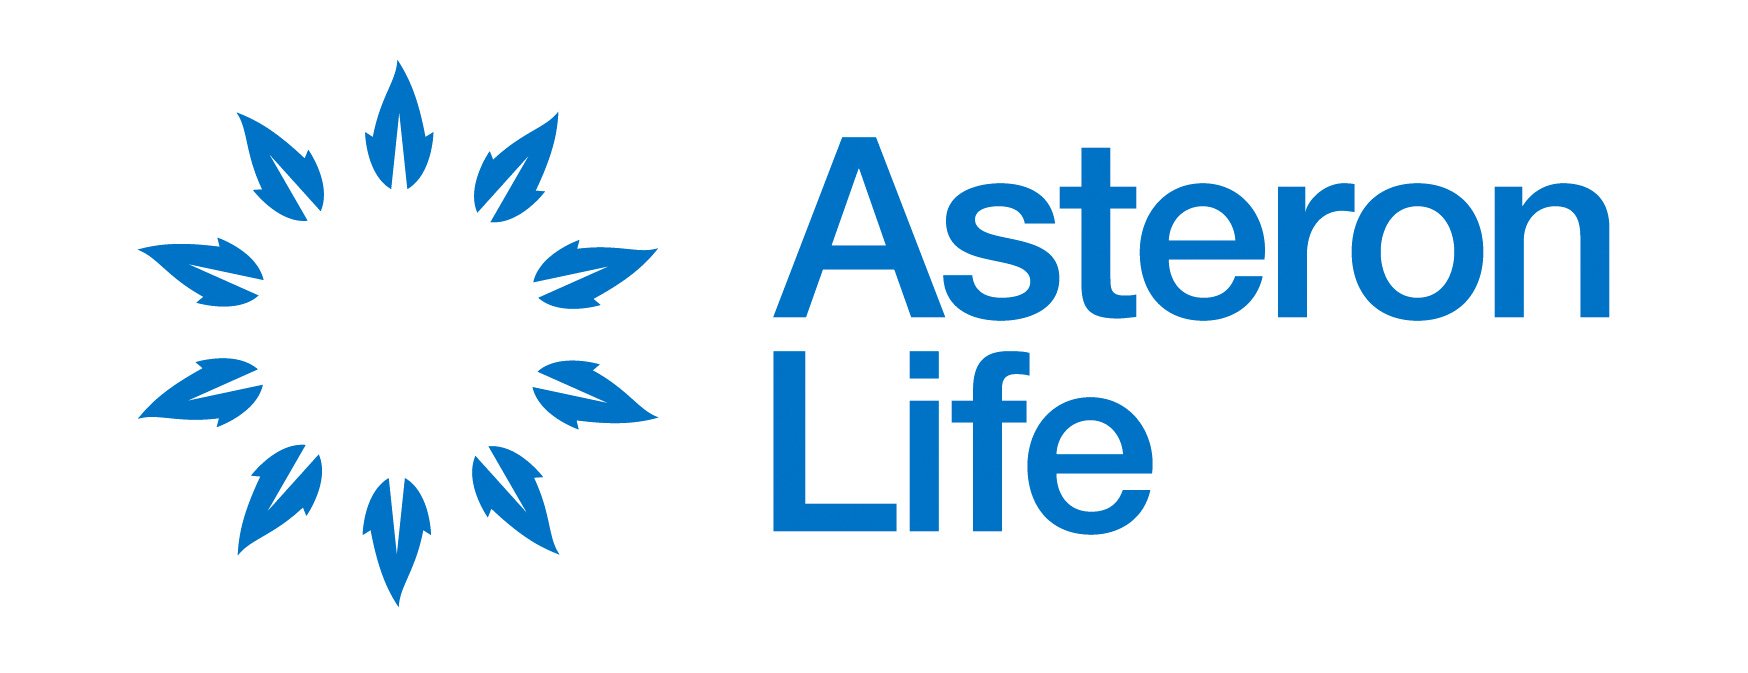 Asteron Life logo.jpg